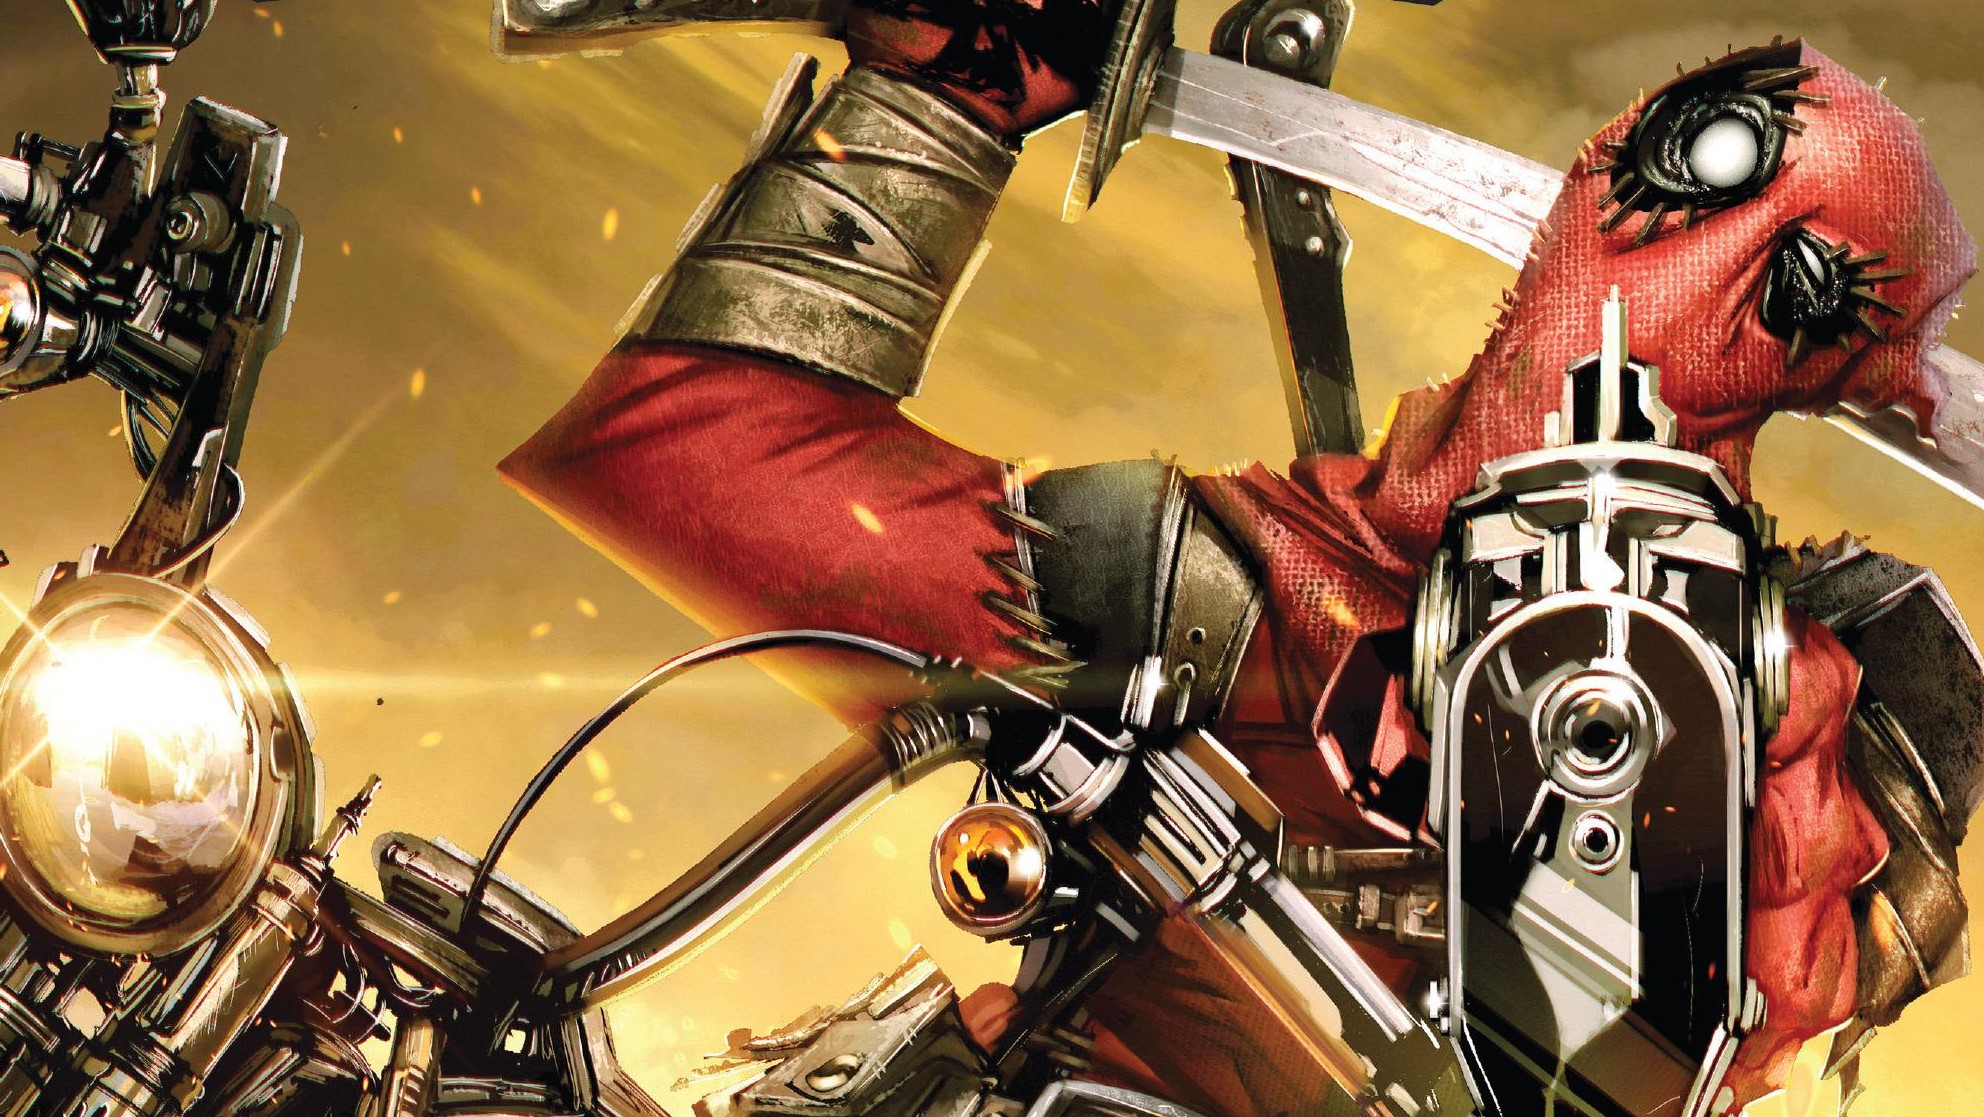 Cartoon Deadpool On Motorcycle - HD Wallpaper 